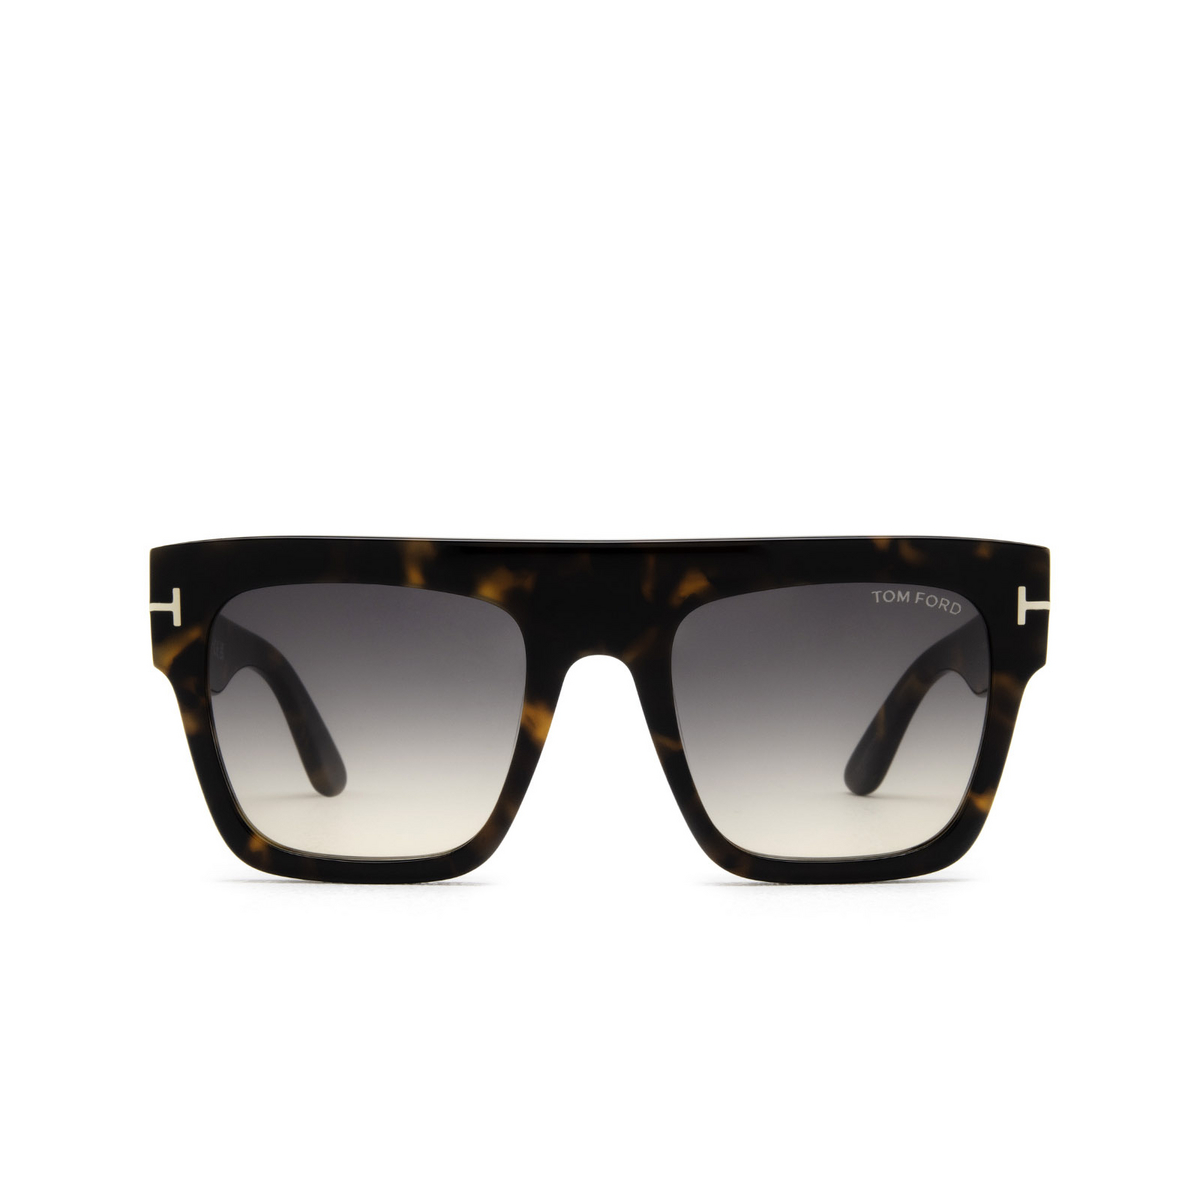 Tom Ford RENEE Sunglasses 52B Dark Havana - front view